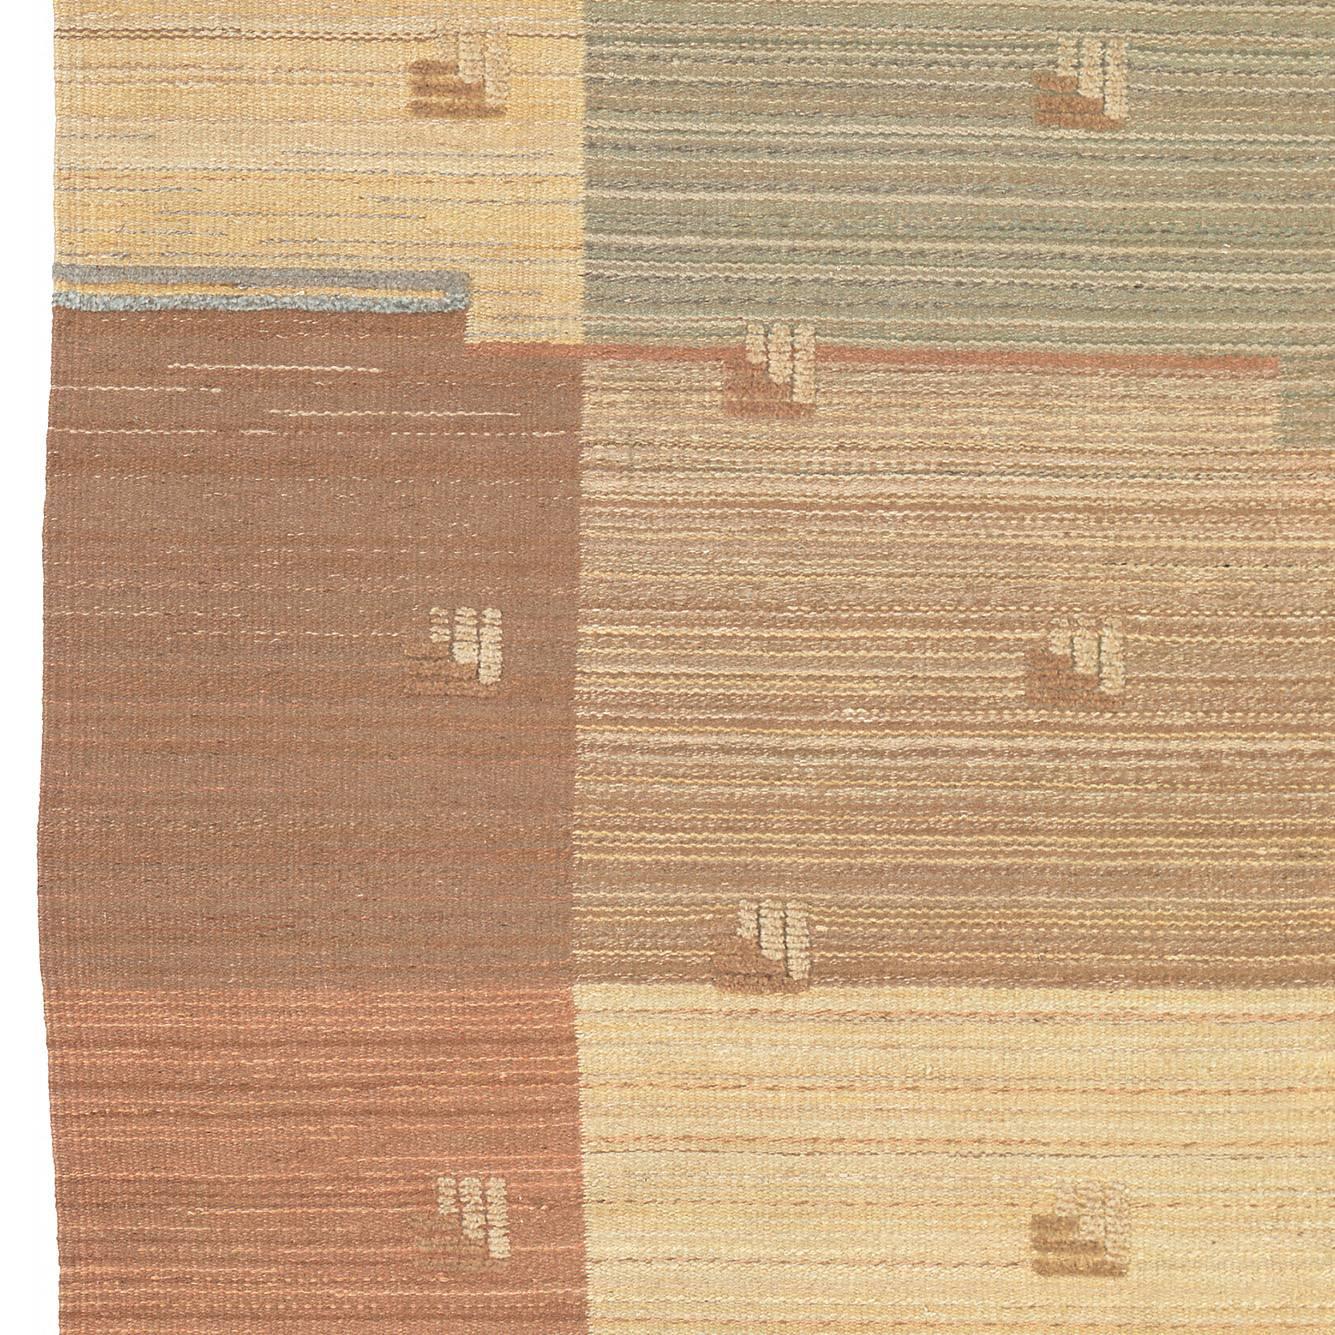 Early-20th century Finnish flat-weave carpet.